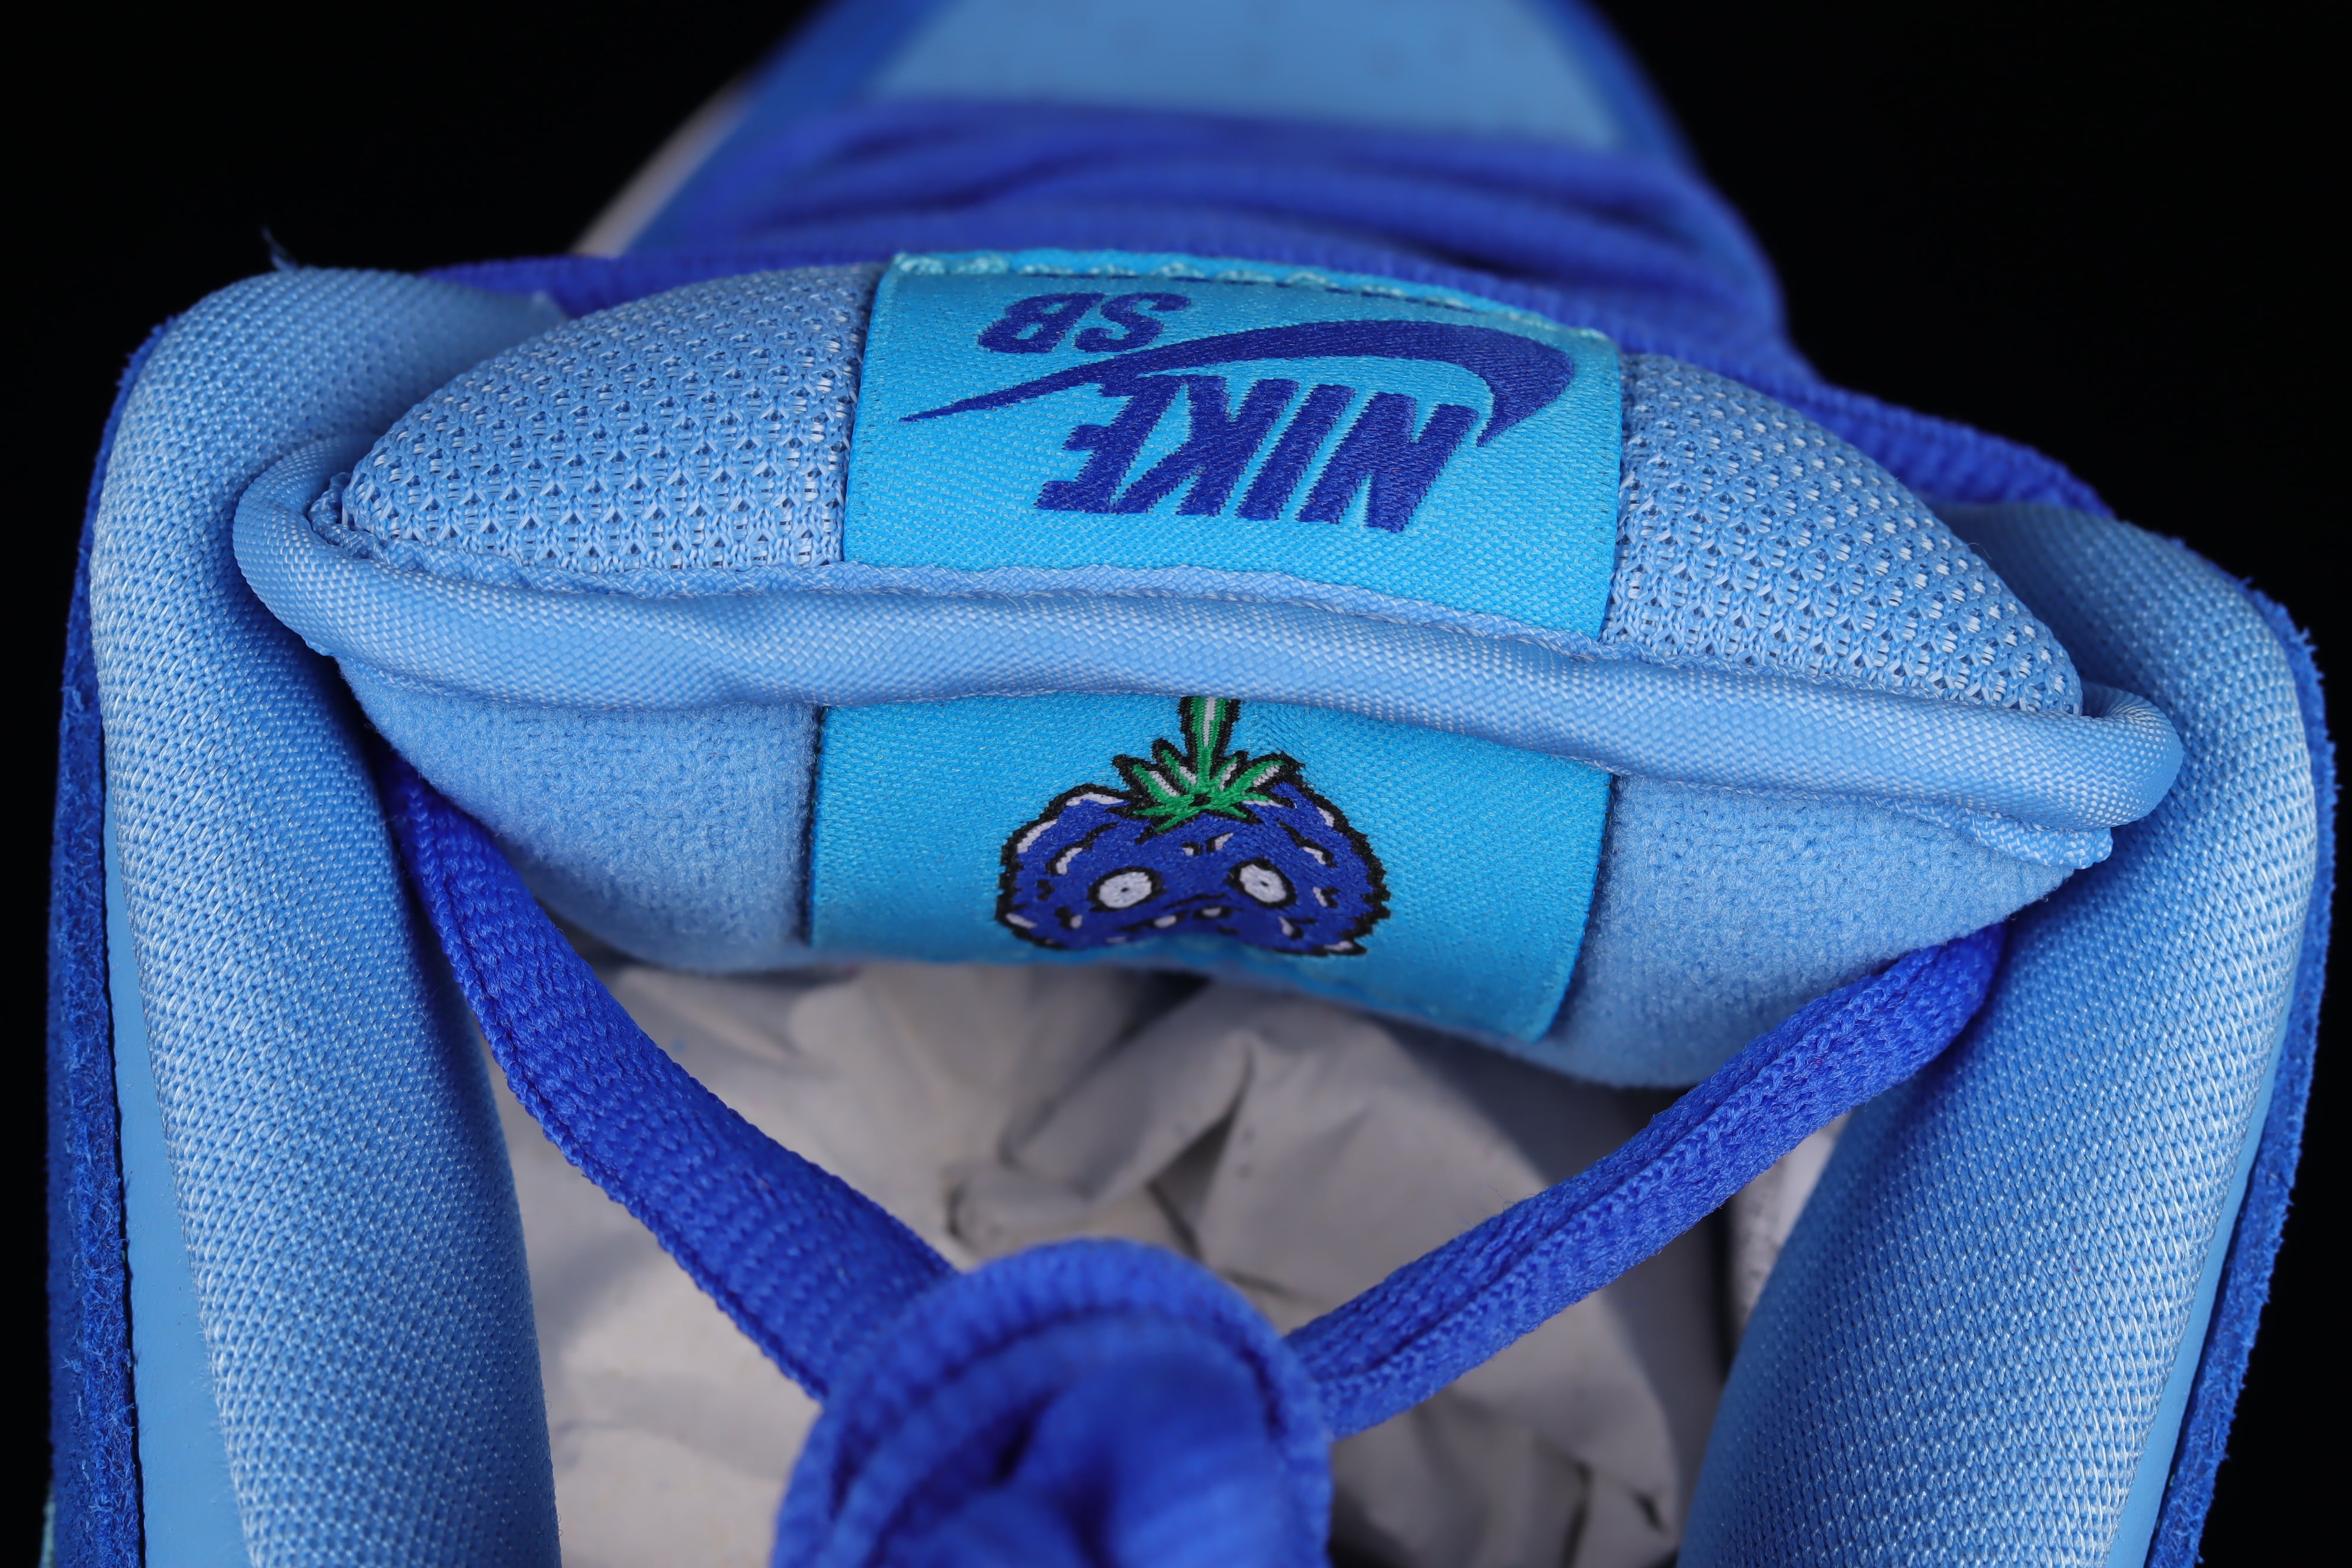 NikeMens SB Dunk Low - Blue Raspberry